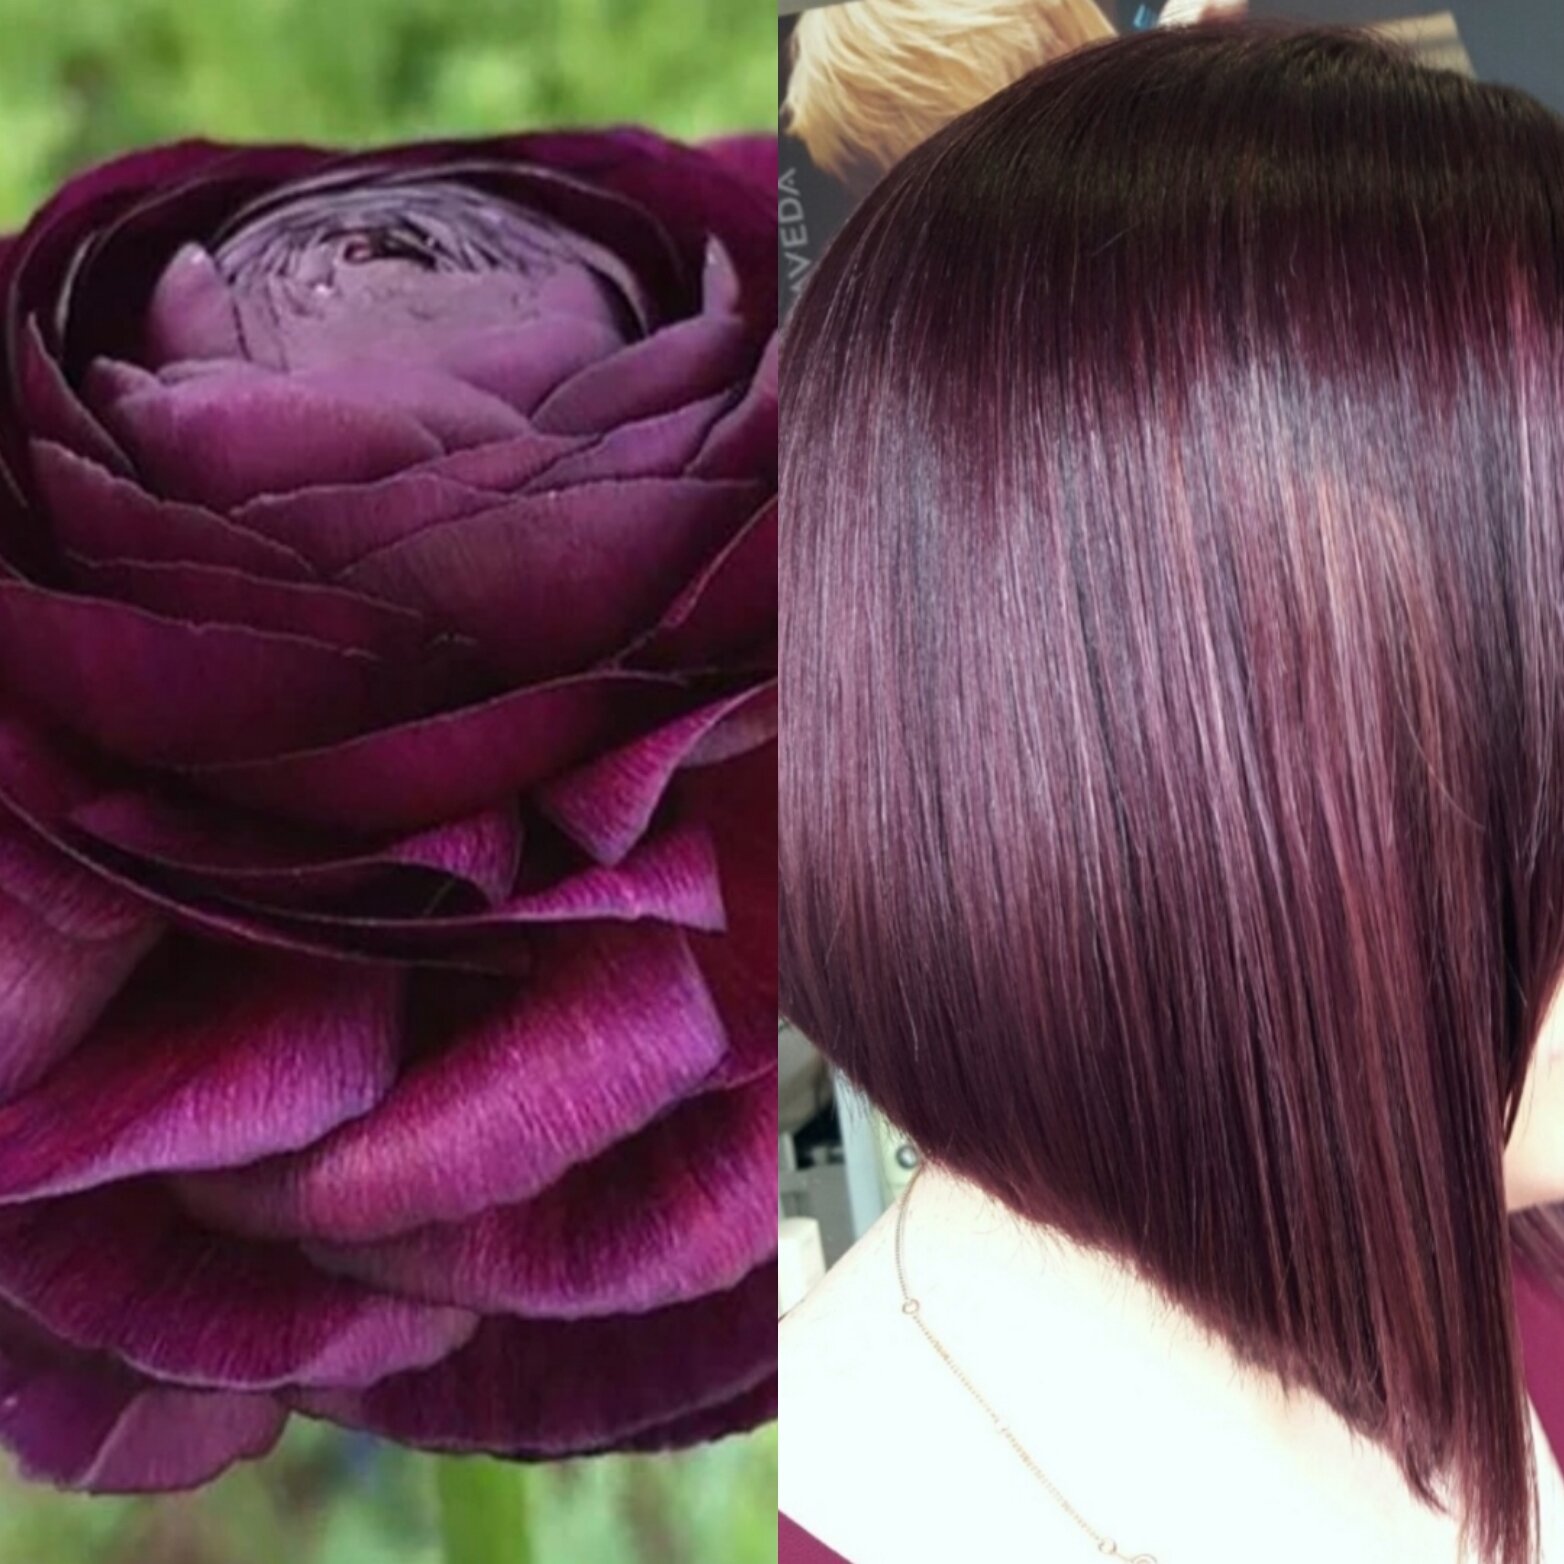 Aveda mulberry hair colour at Pello.jpg